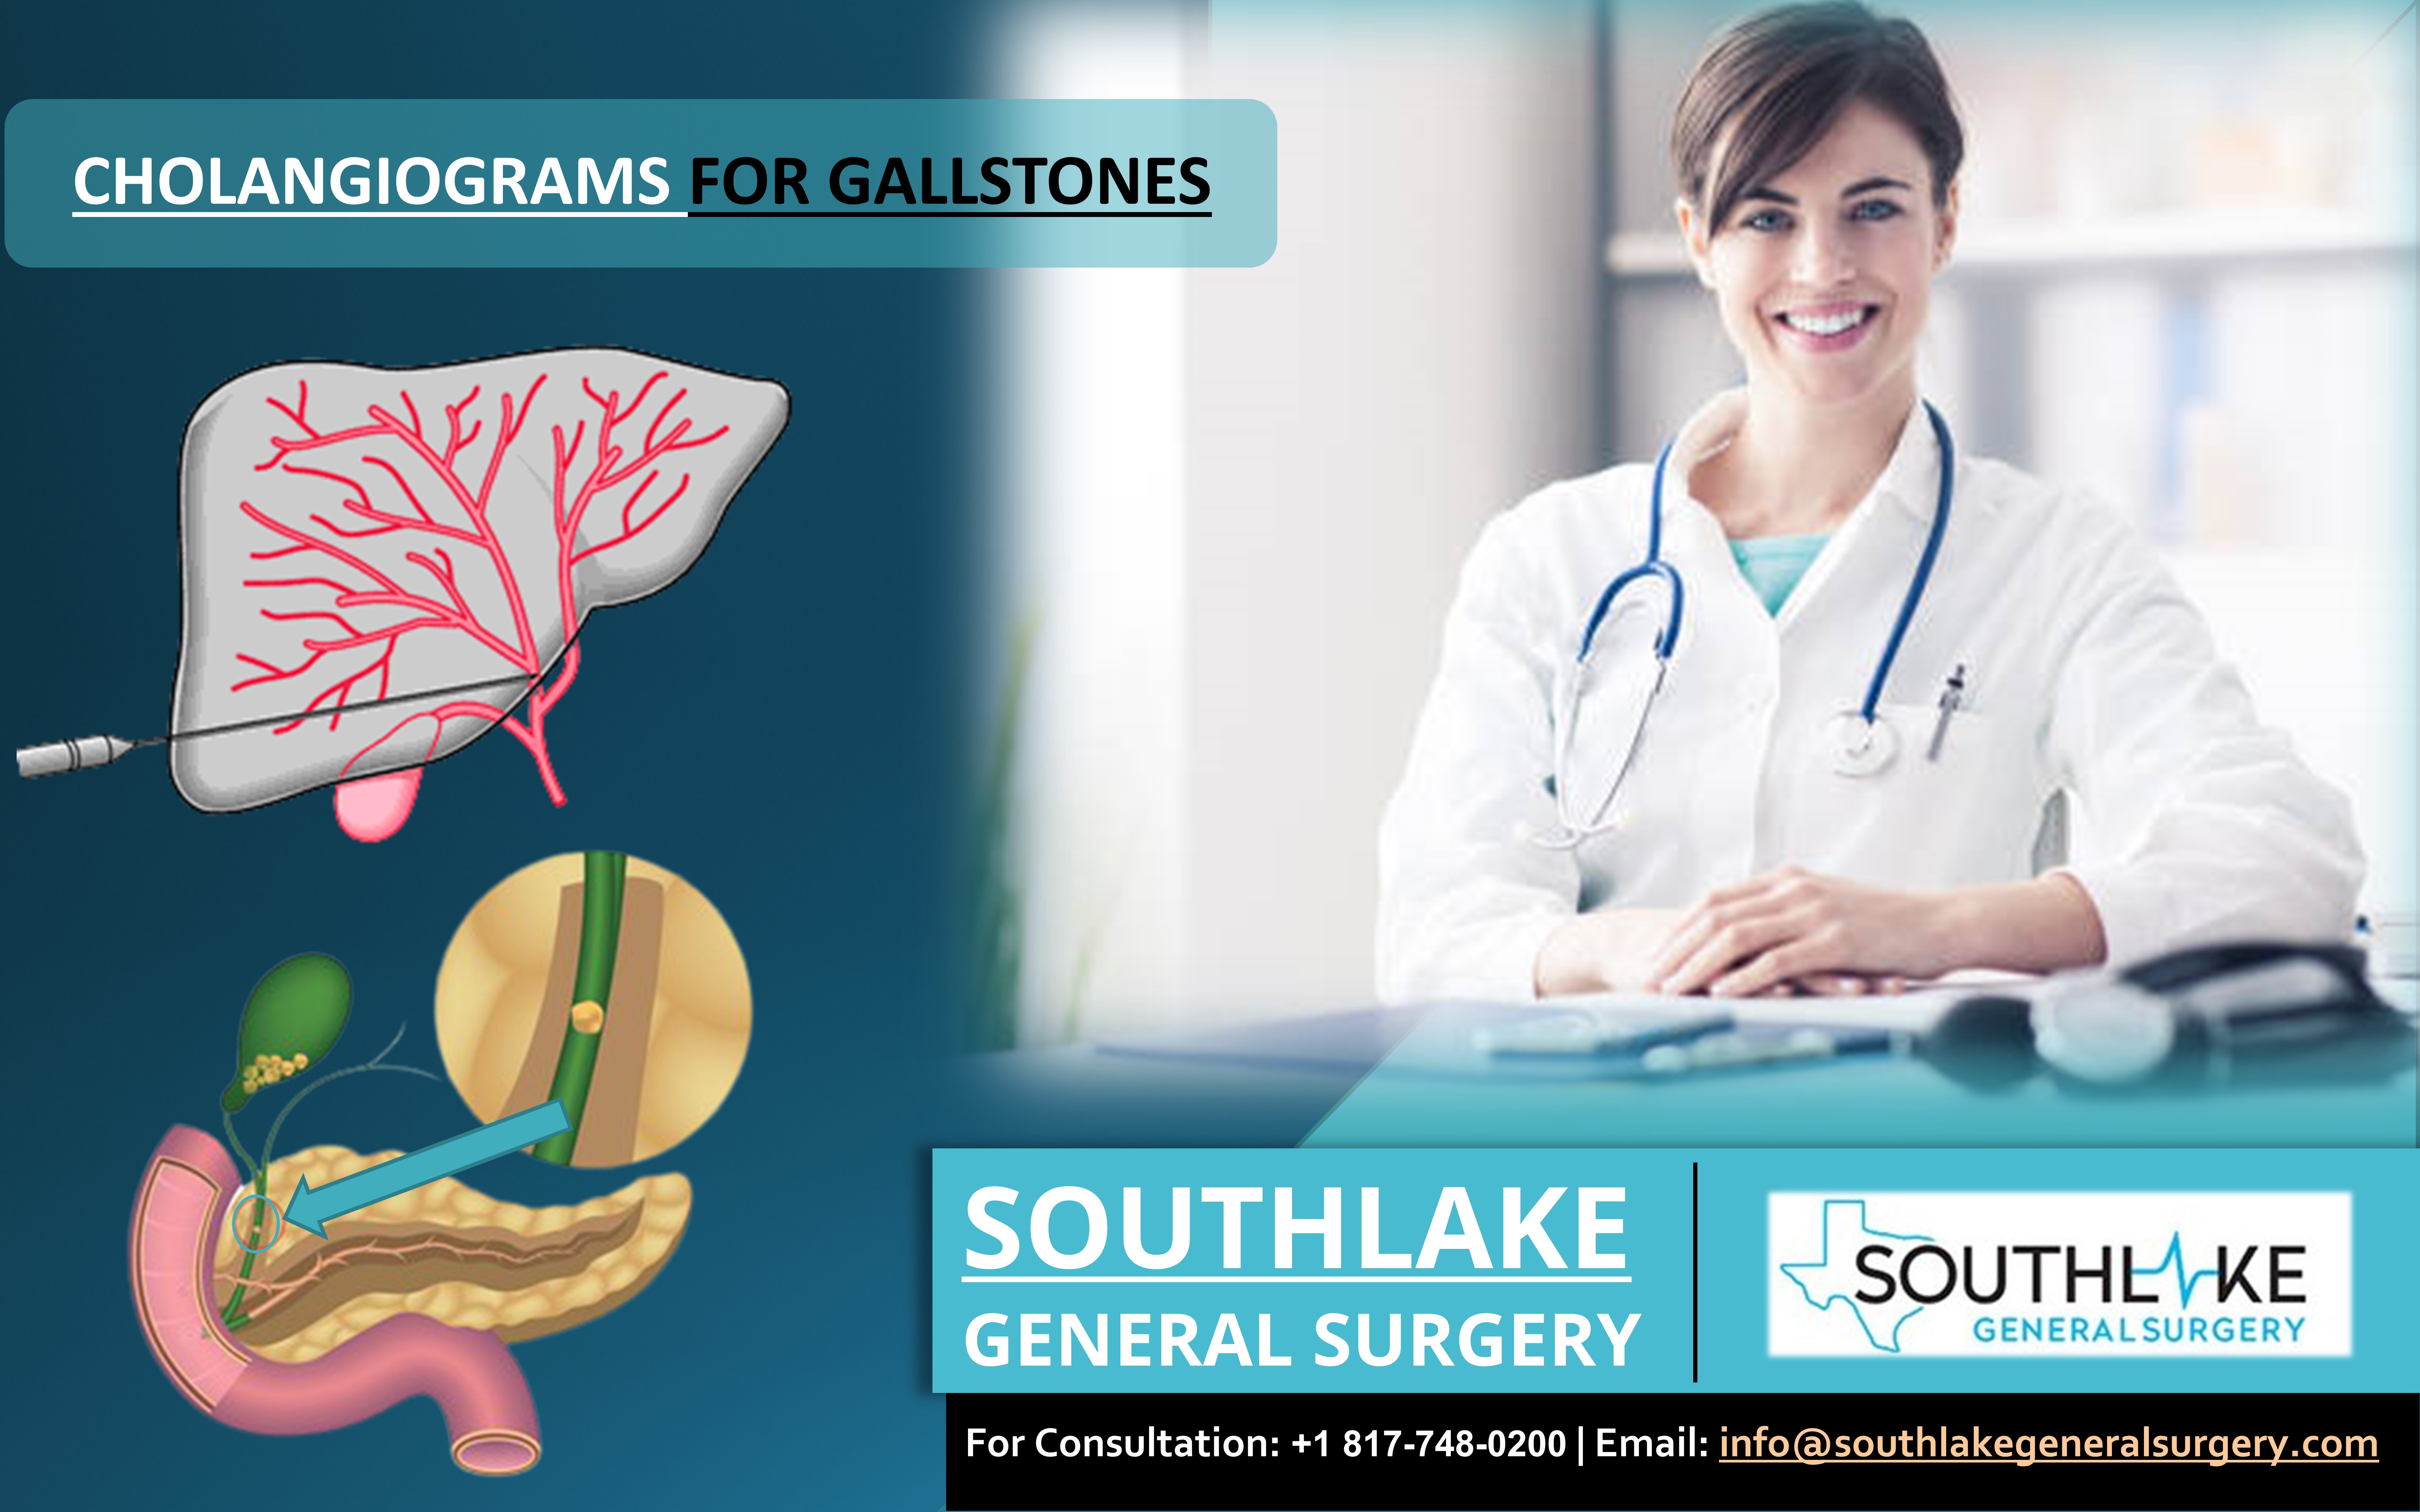 Cholangiograms for Gallstones